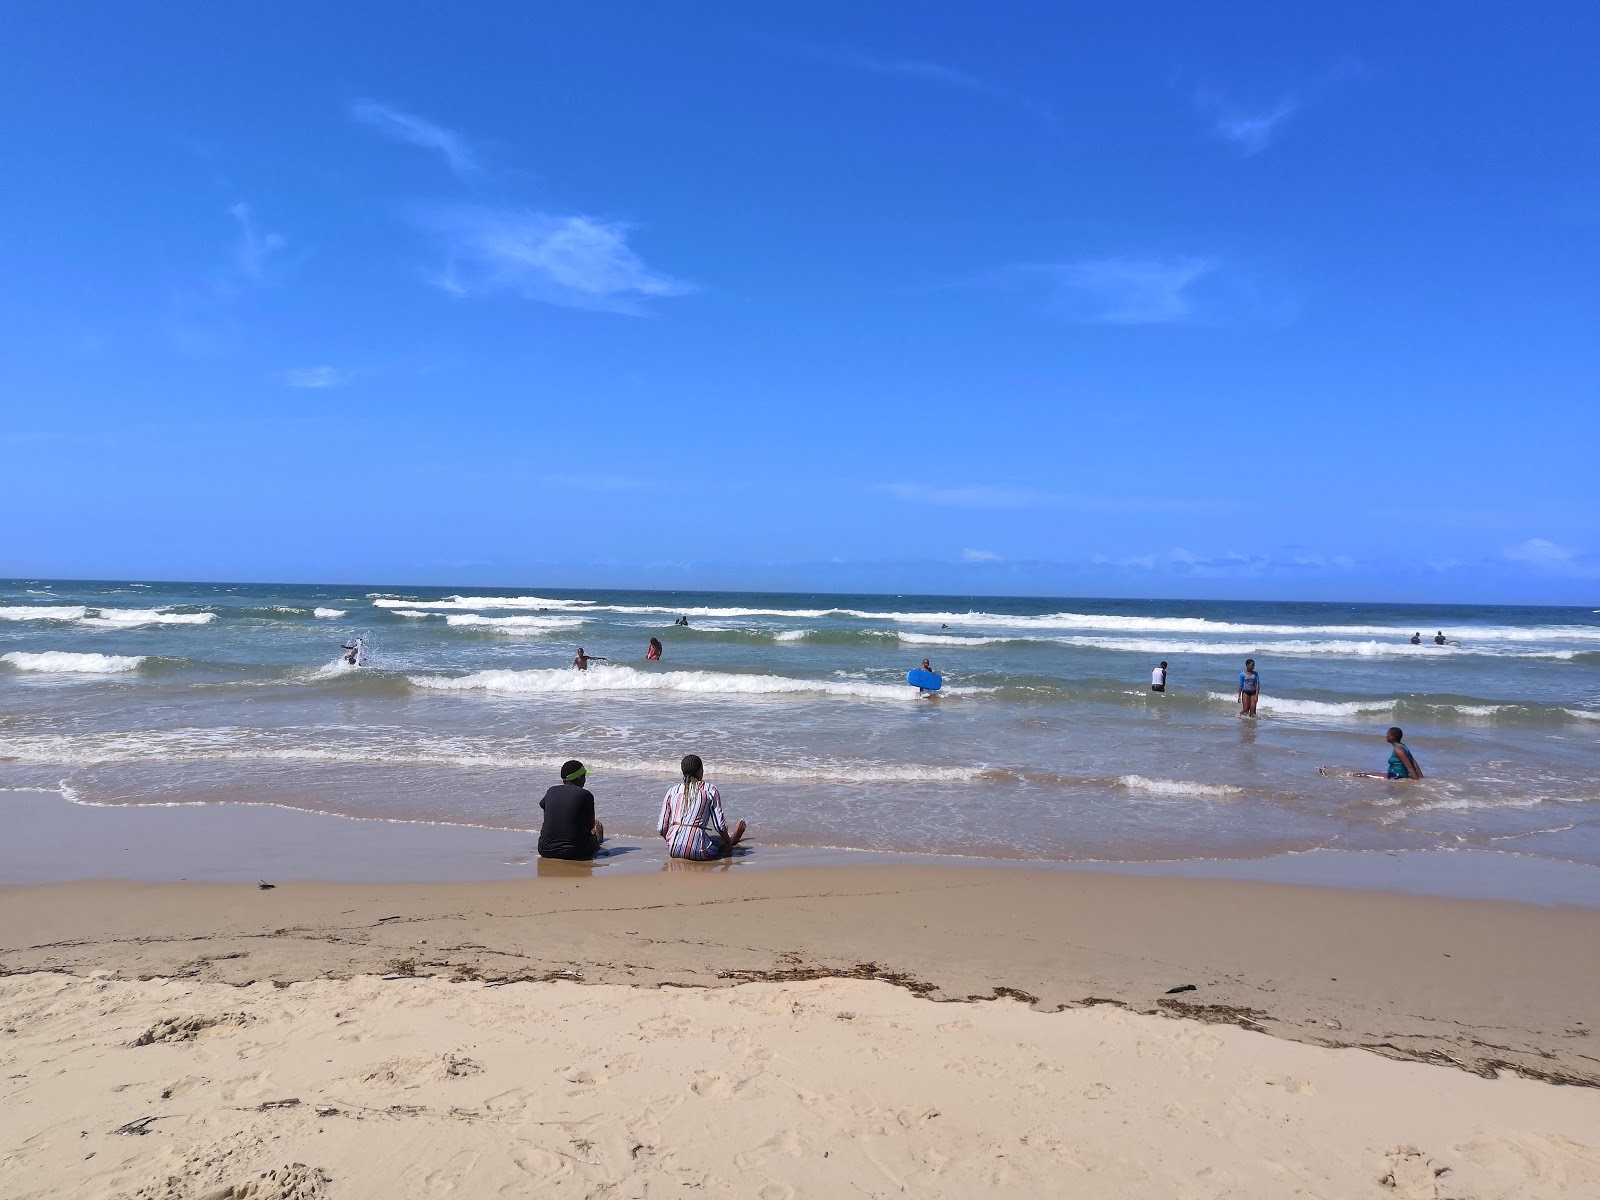 Fotografija Nenga beach z prostoren zaliv